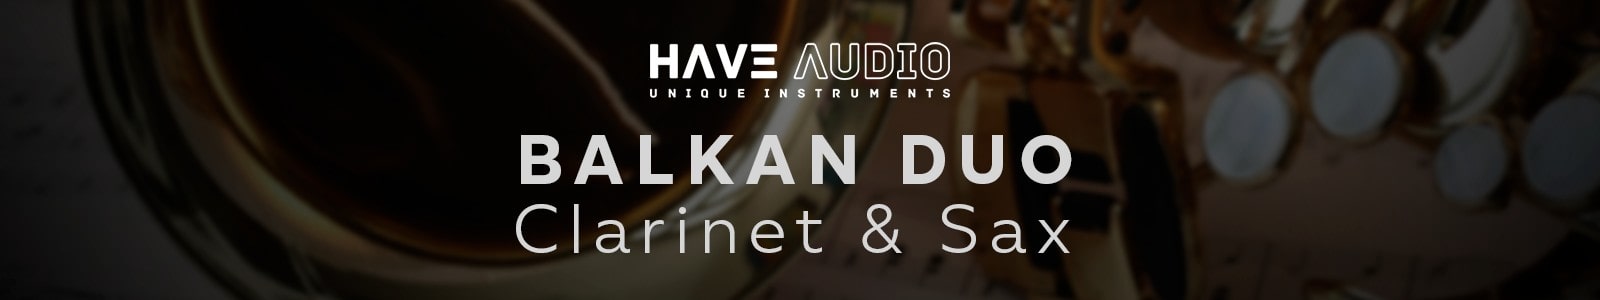 Balkan Duo Bundle by Have Audio